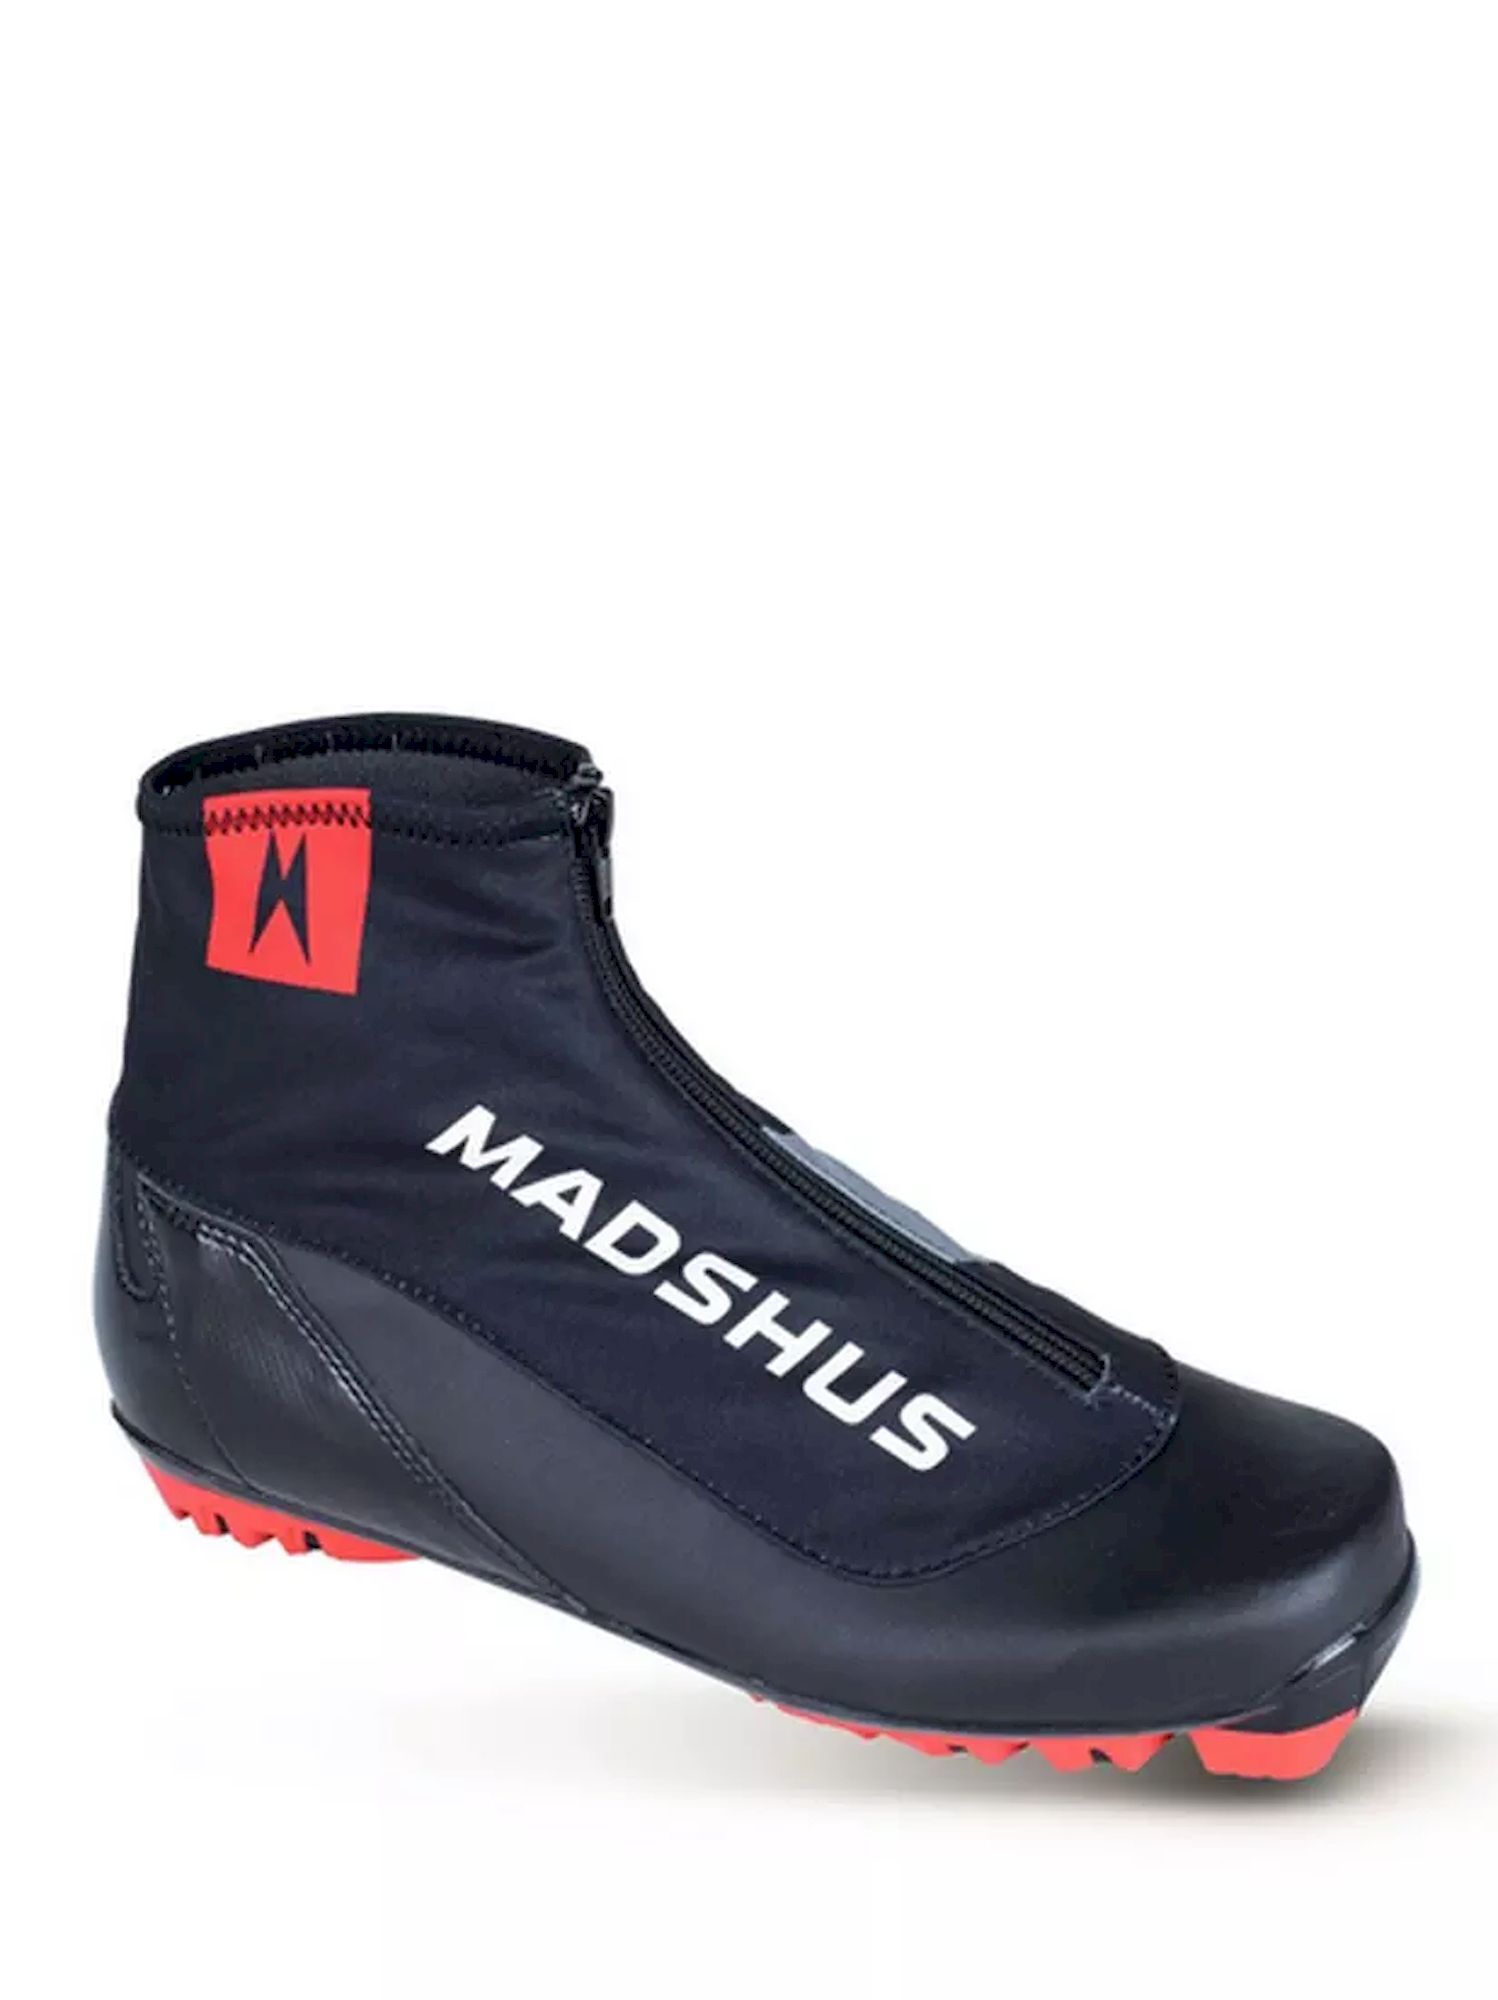 Madshus Endurace Classic - Chaussures ski de fond | Hardloop